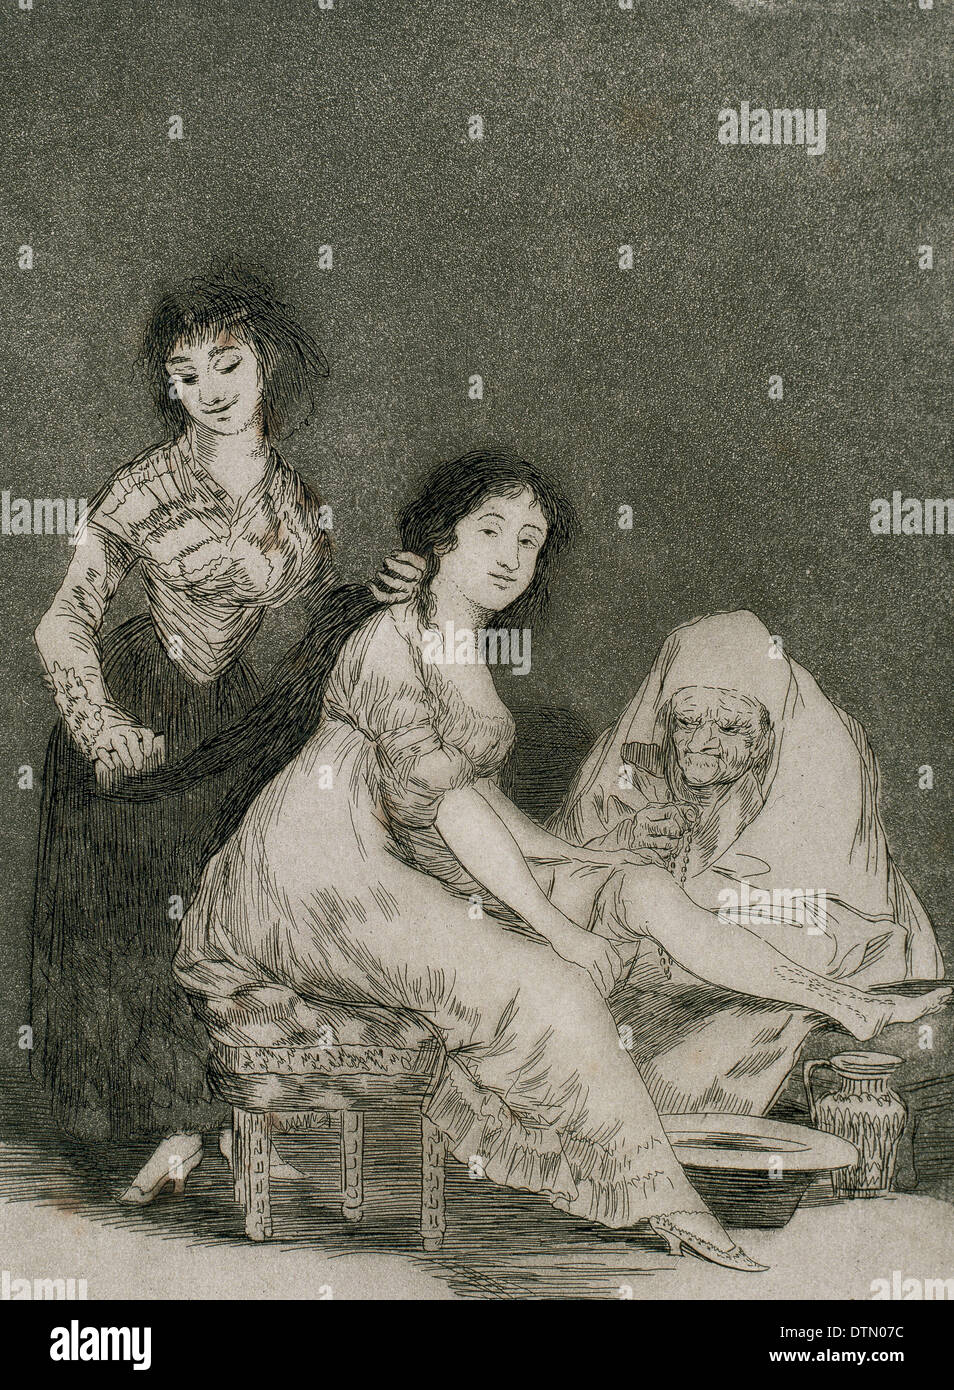 Francisco de Goya (1746-1828). Spanischer Maler und Grafiker. Los Caprichos. "Ruego Por Ella" (sie betet für sie). Aquatinta. Stockfoto